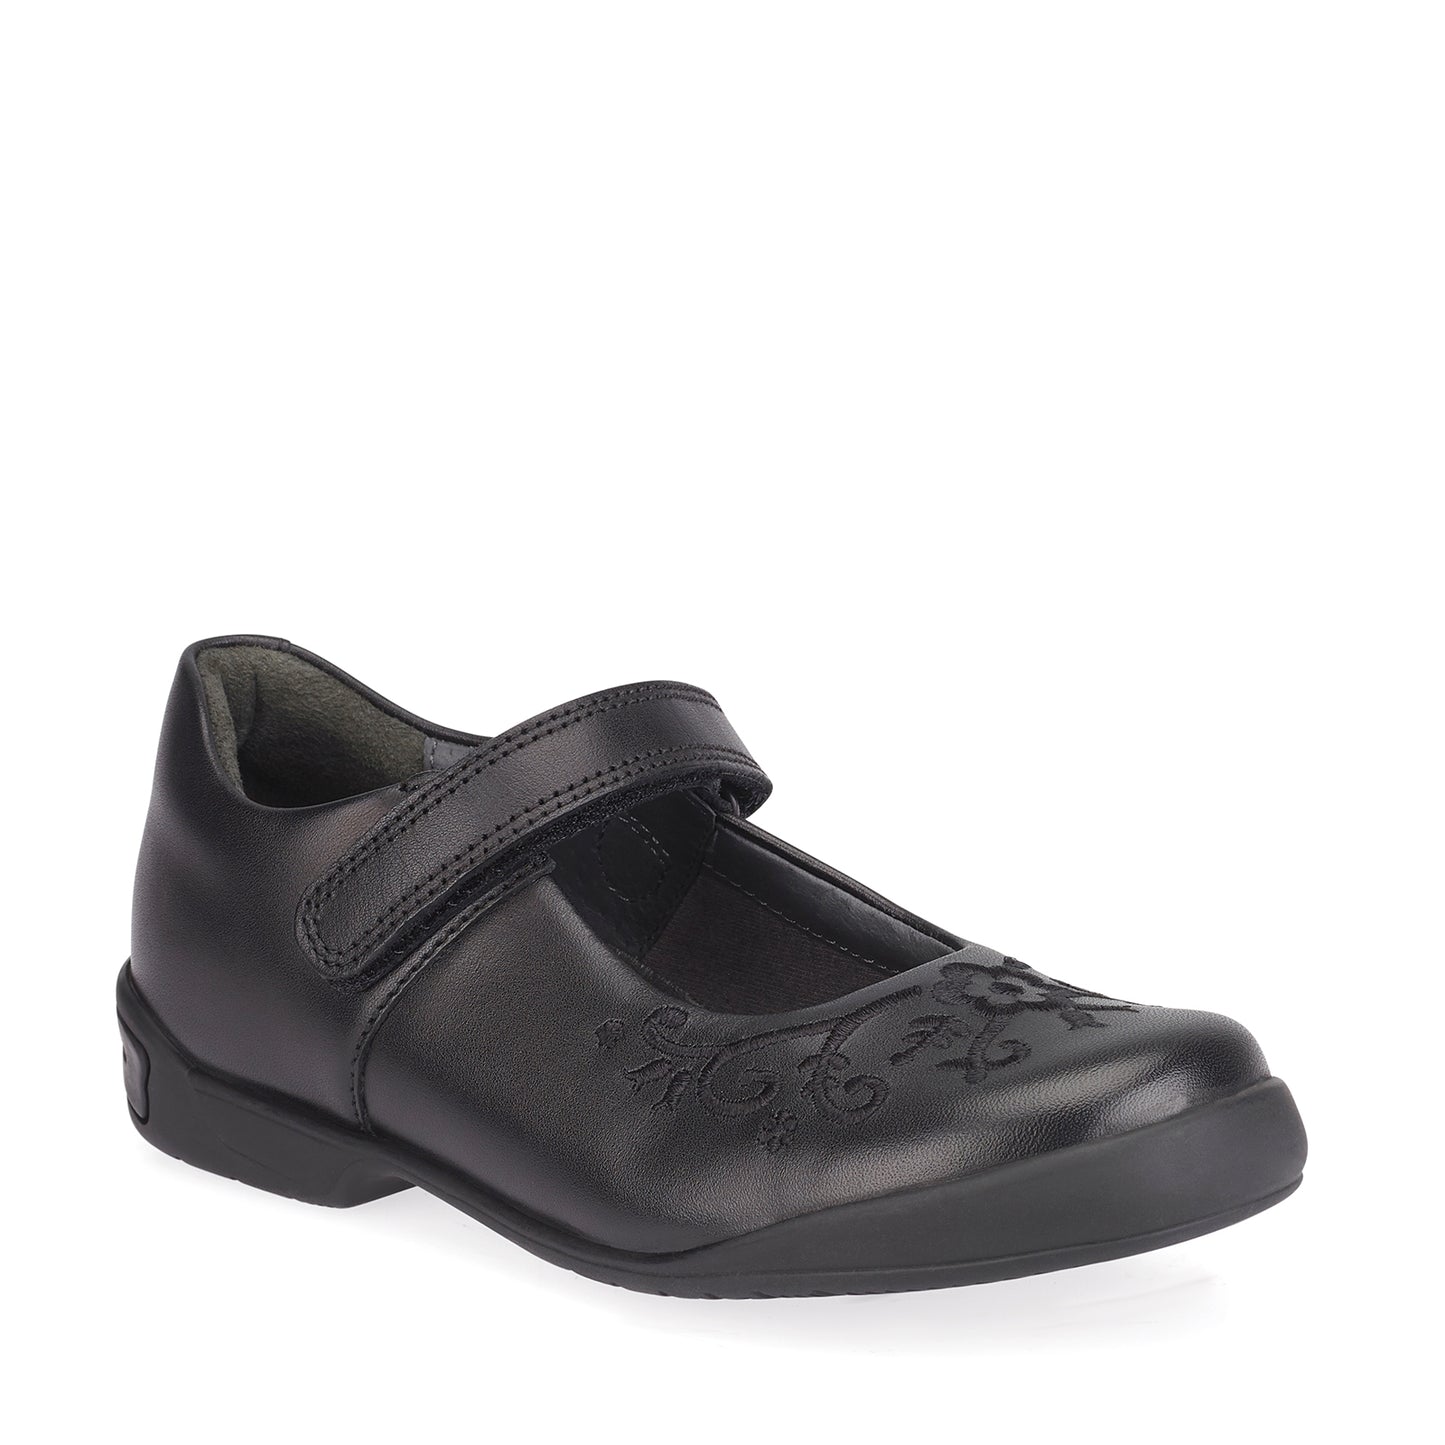 Hopscotch Black Leather Girl's Mary Jane School Shoe